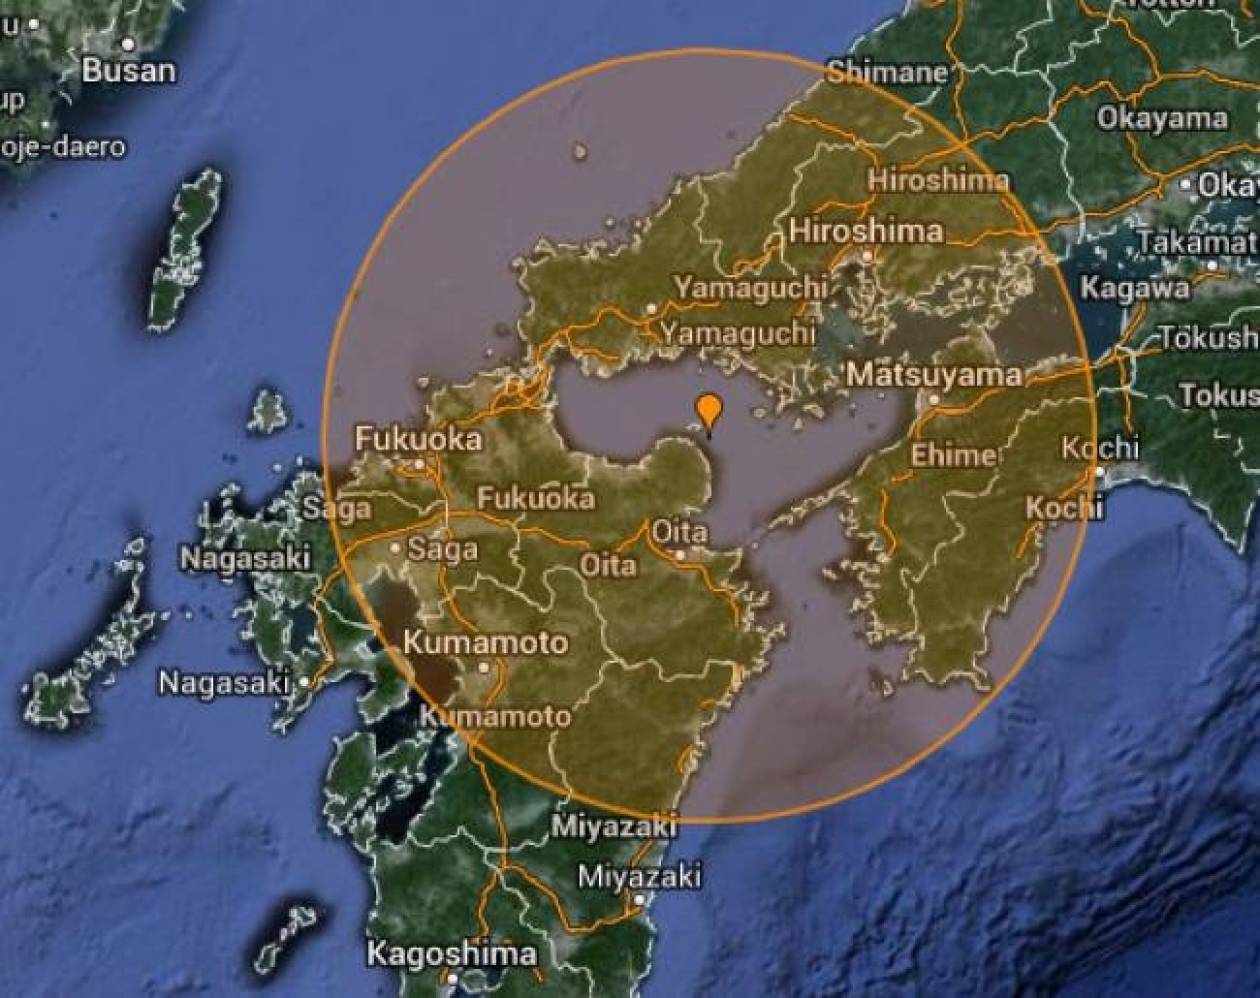 Earthquake 6.3 Richter struck off Japan